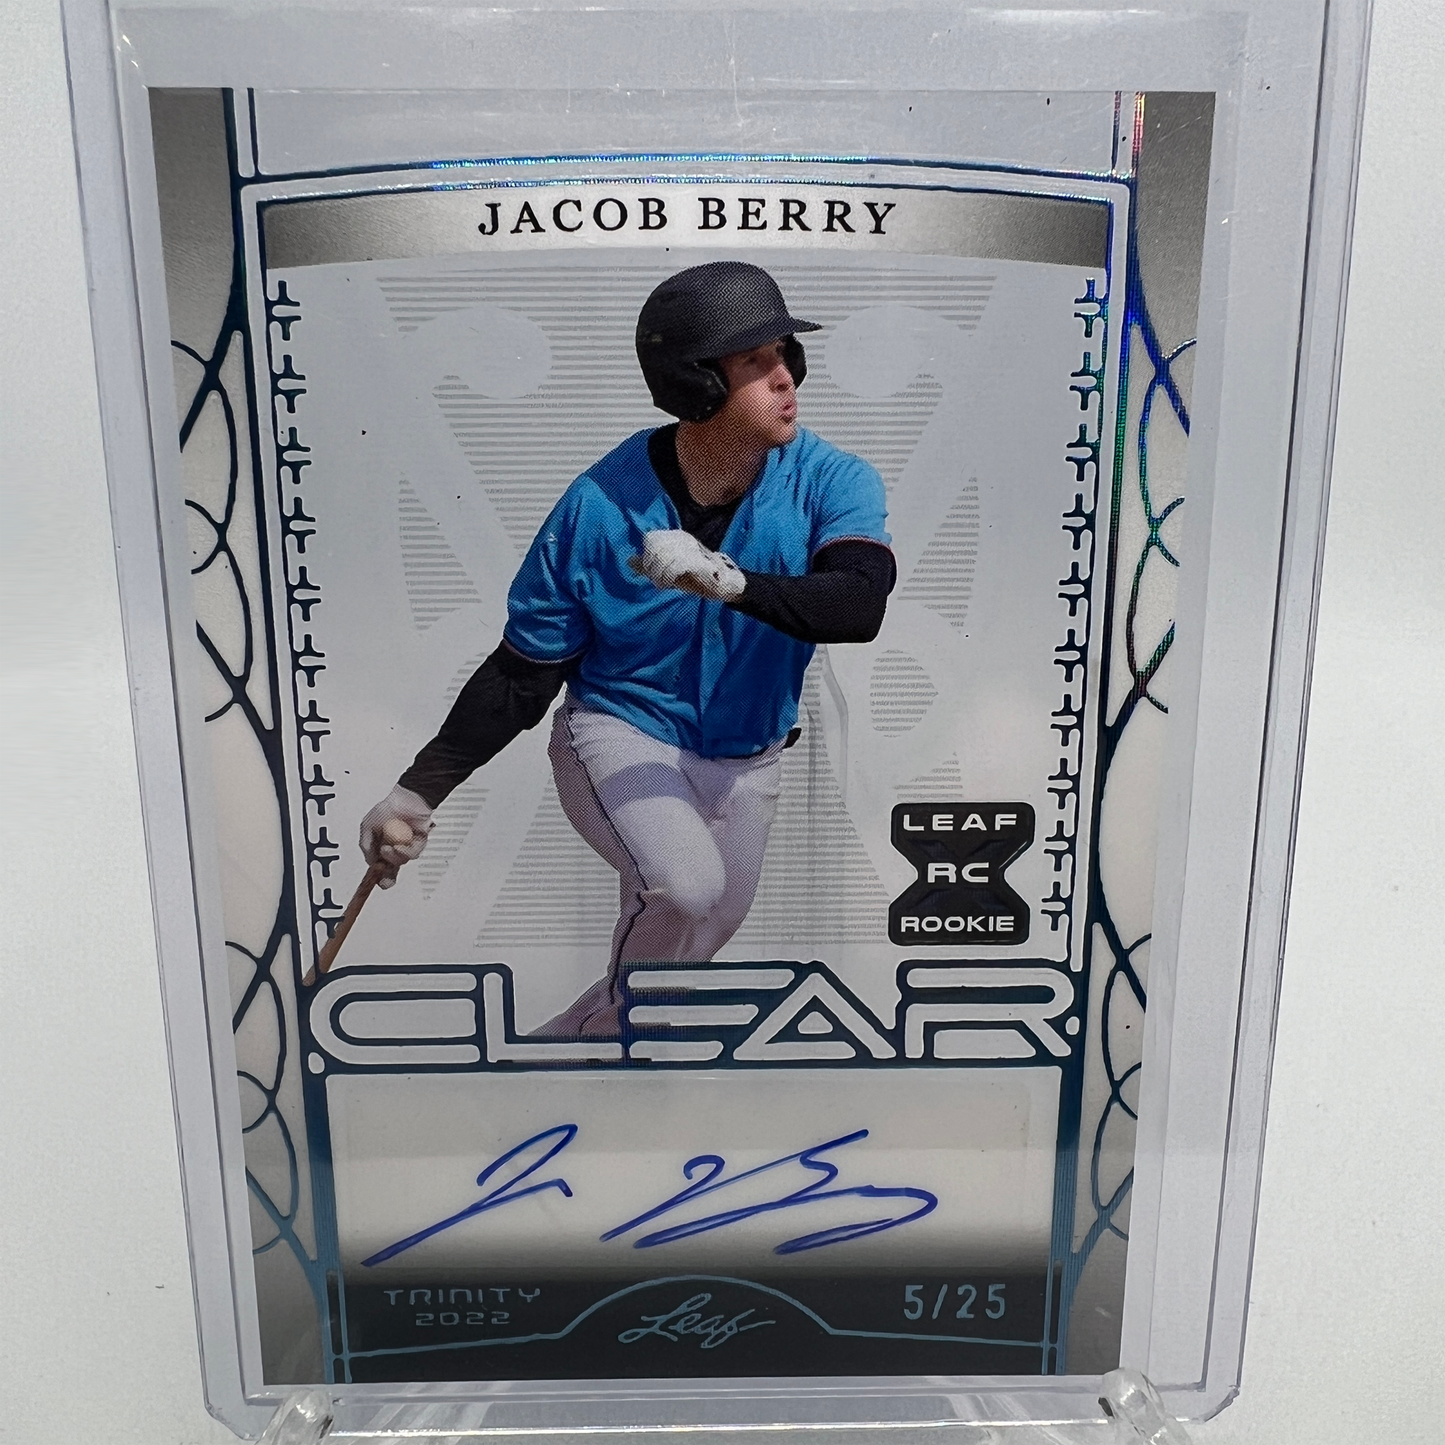 Jacob Berry 5/25 Autographed Baseball Card